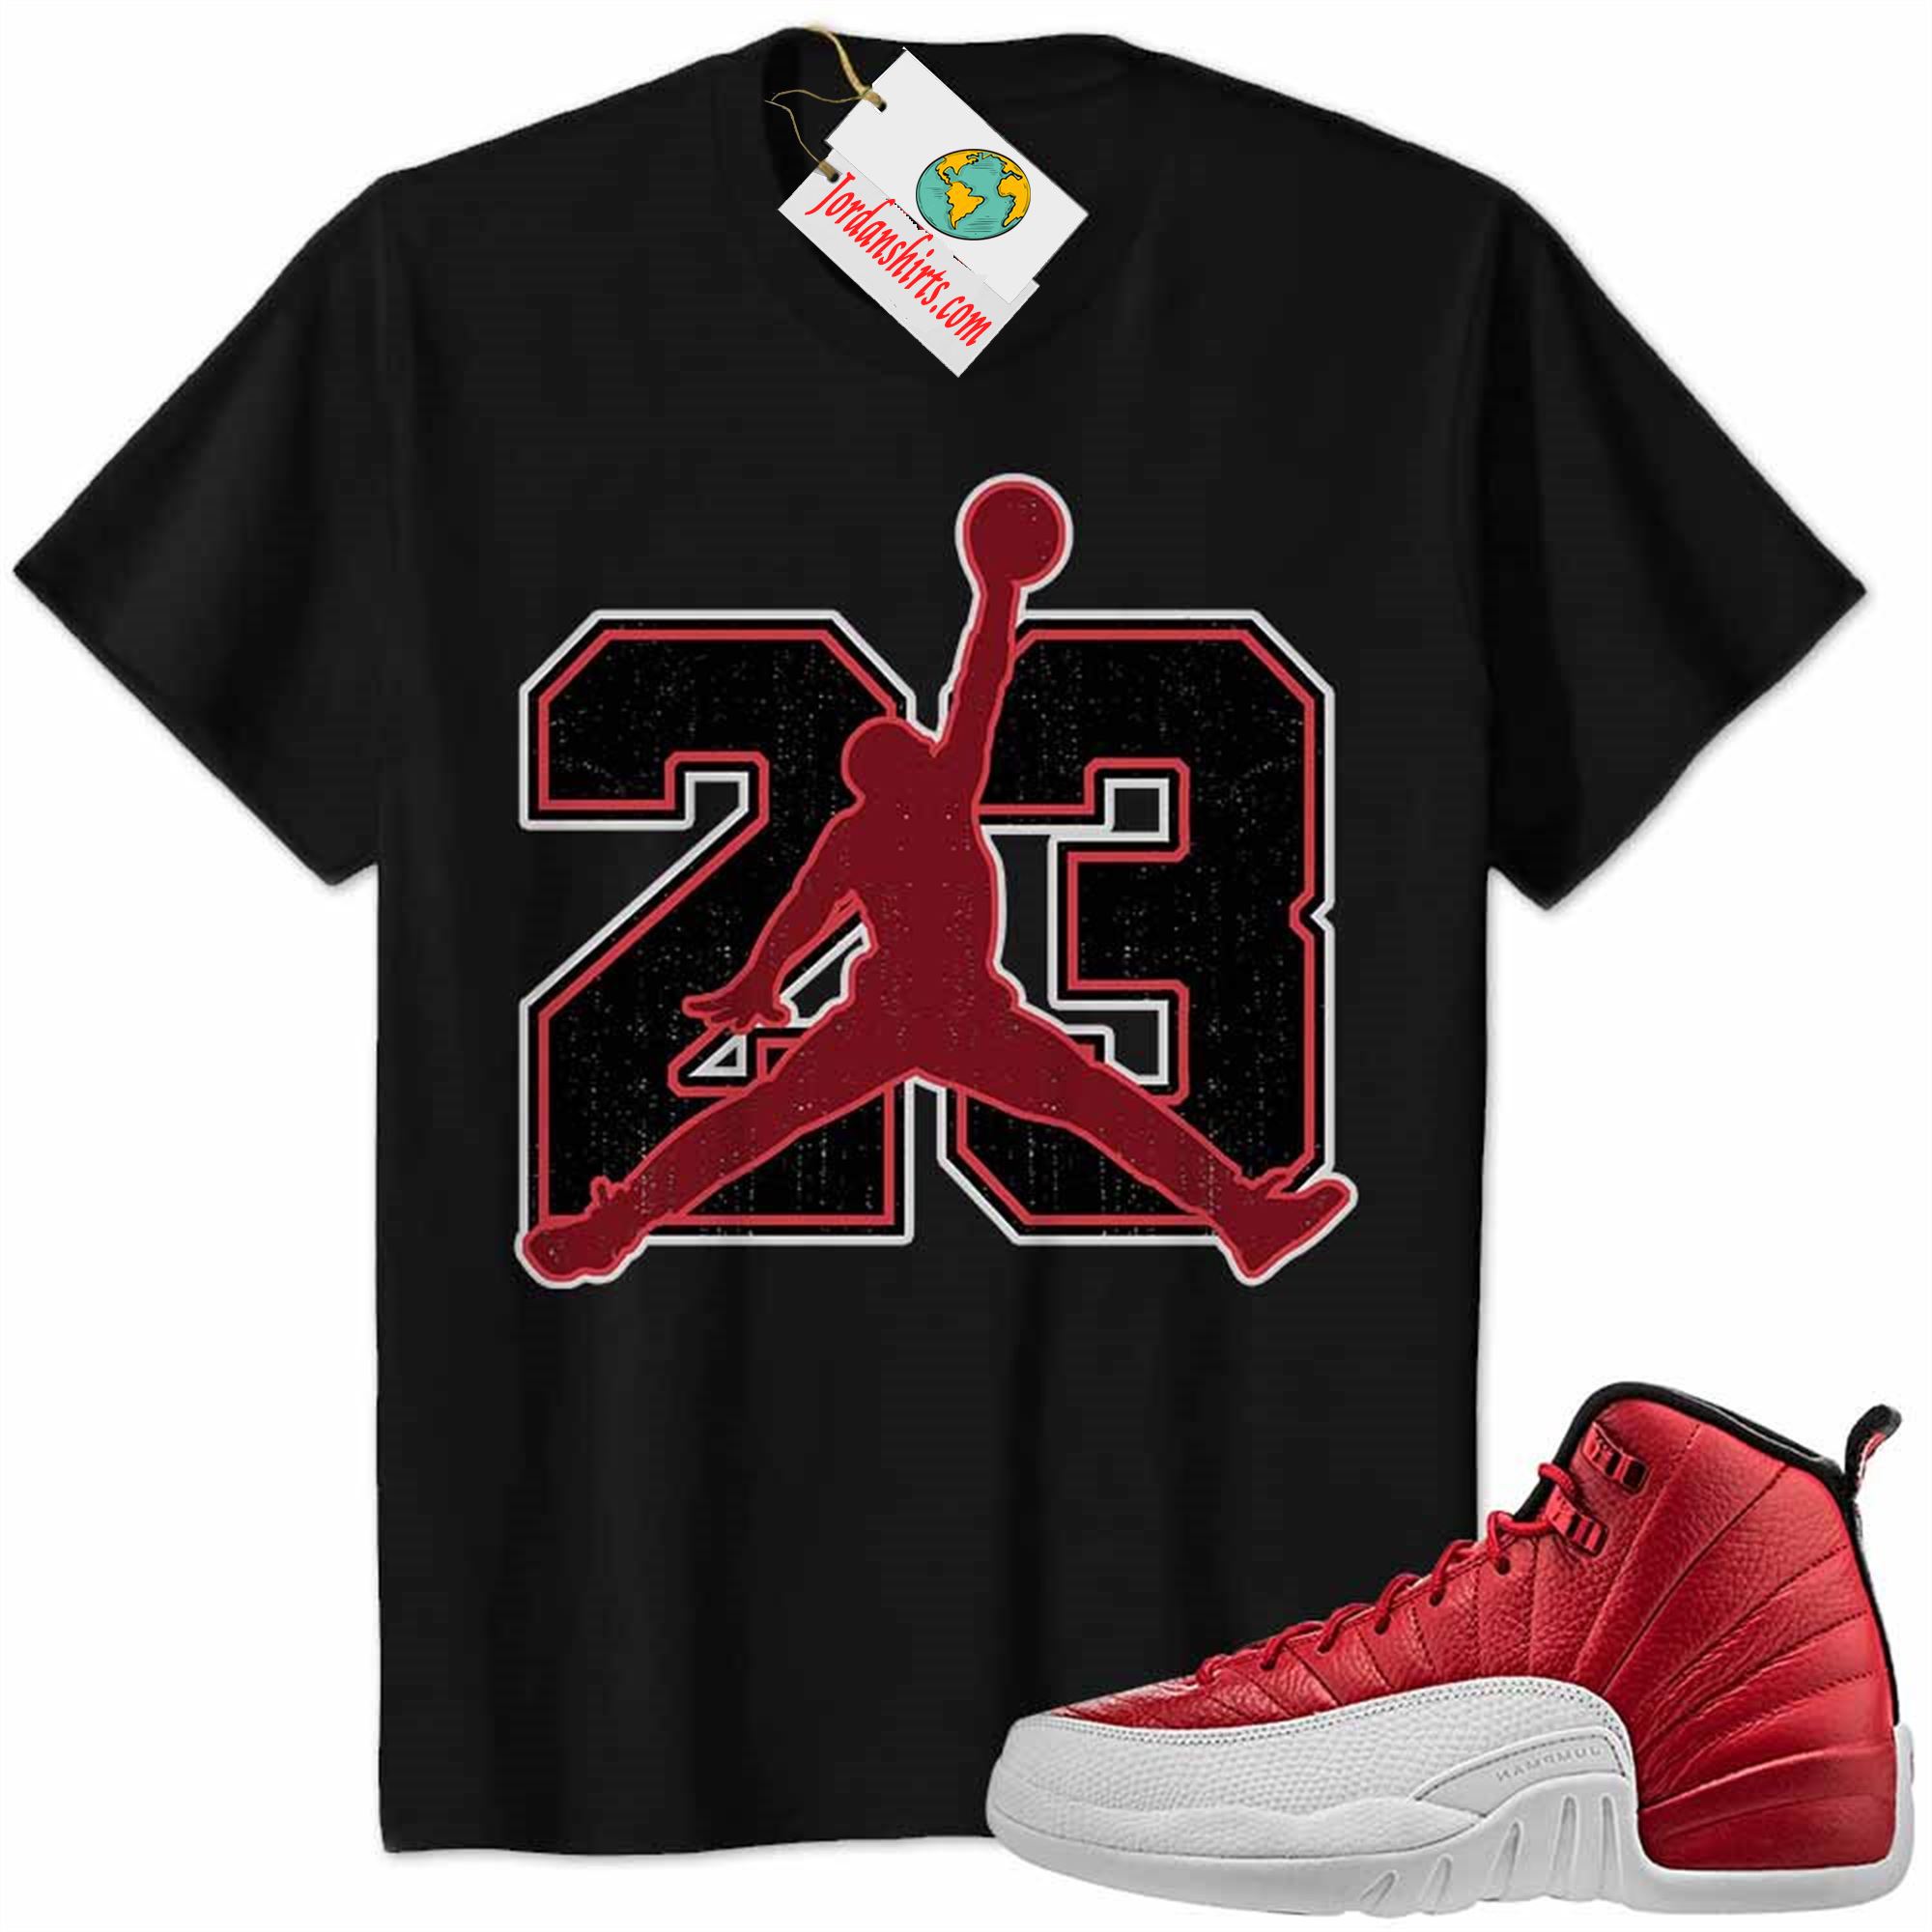 Jordan 12 Shirt, Jordan 12 Gym Red Shirt Jumpman No23 Black Full Size Up To 5xl